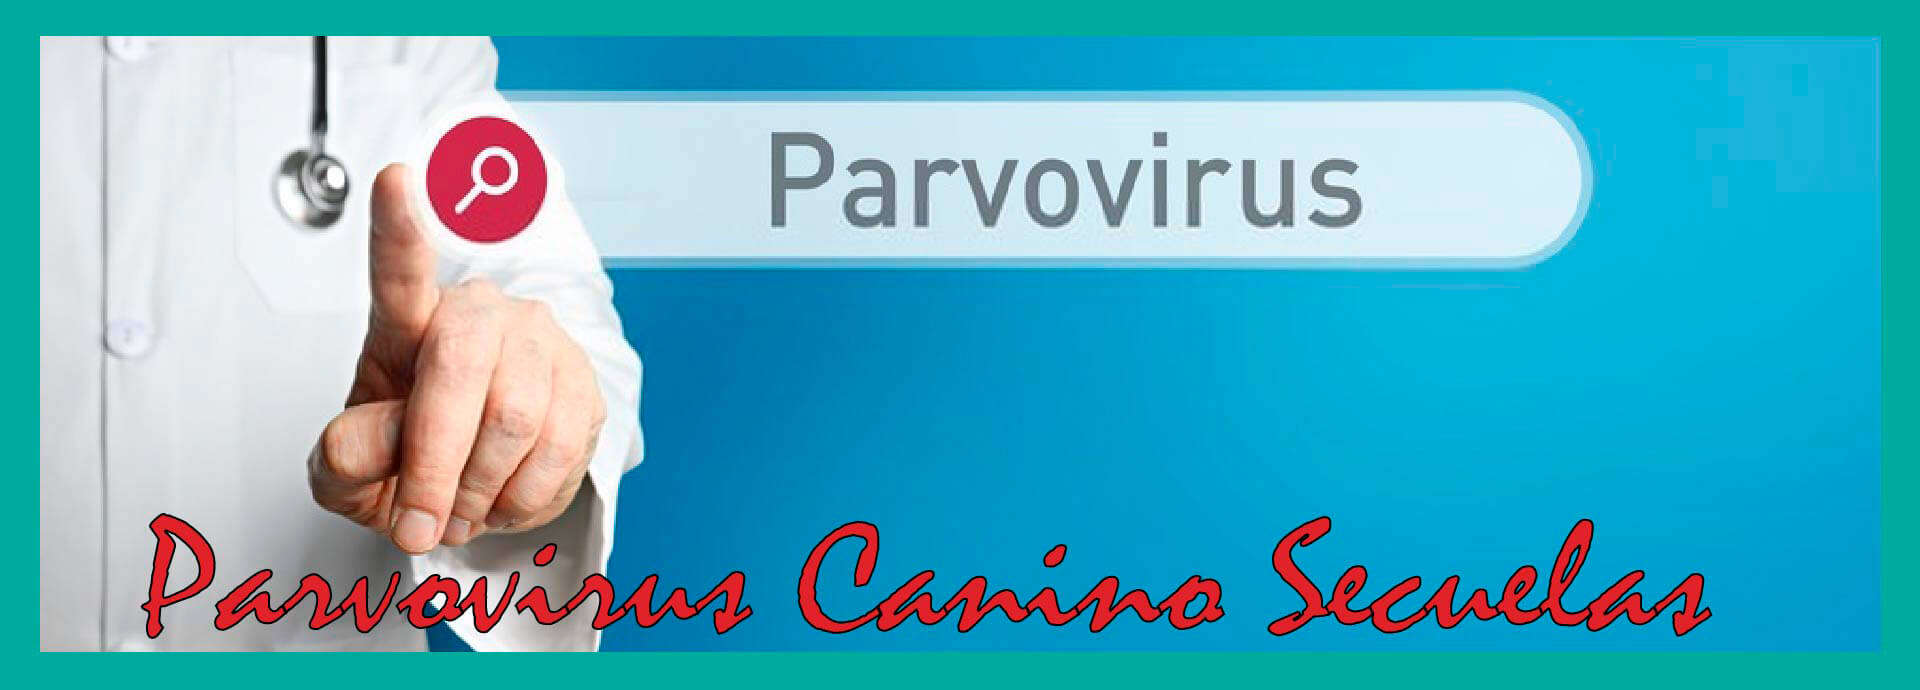 Parvovirus canino secuelas